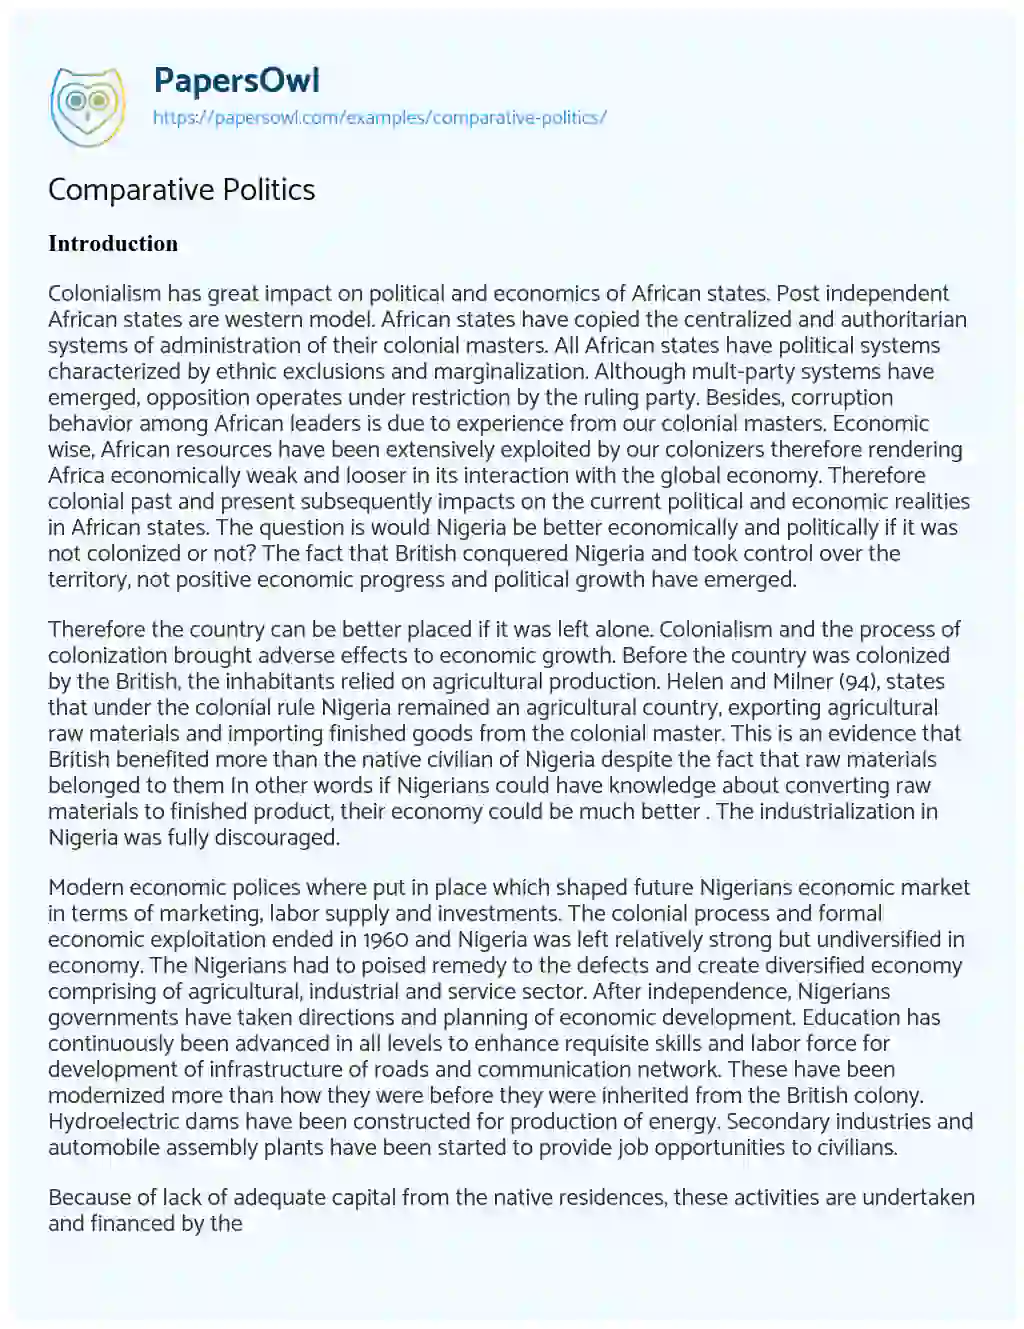 Essay on Comparative Politics